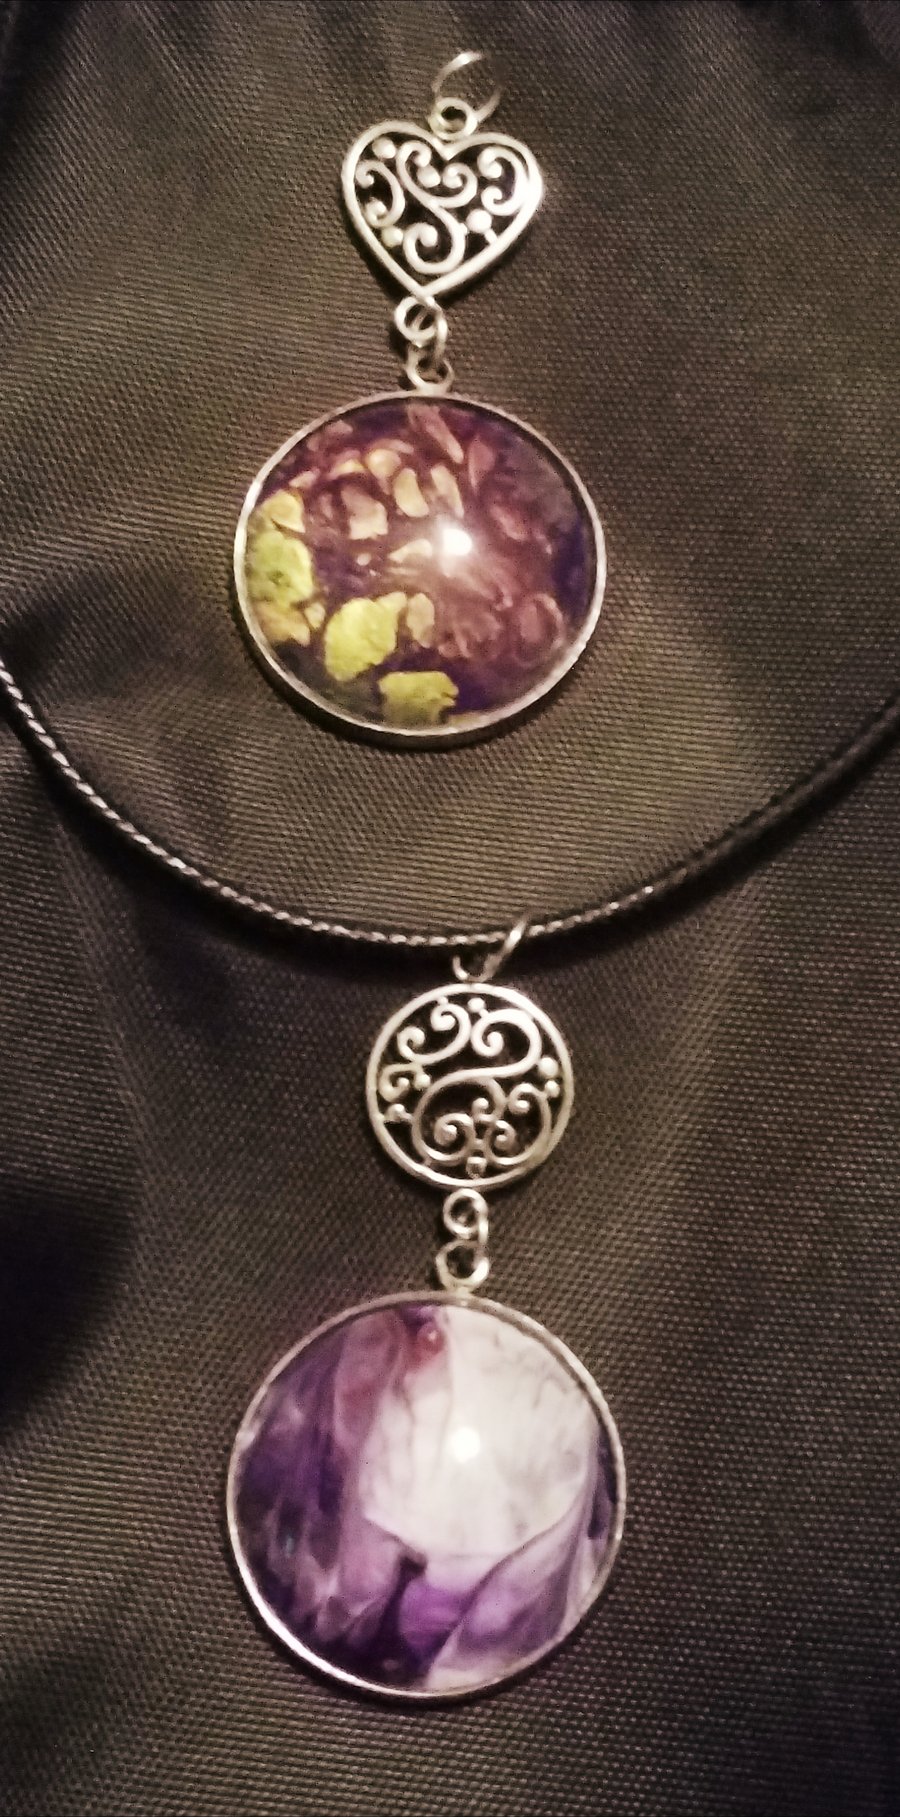 2 for 1 handmade fluid art pendants with charm. Purples